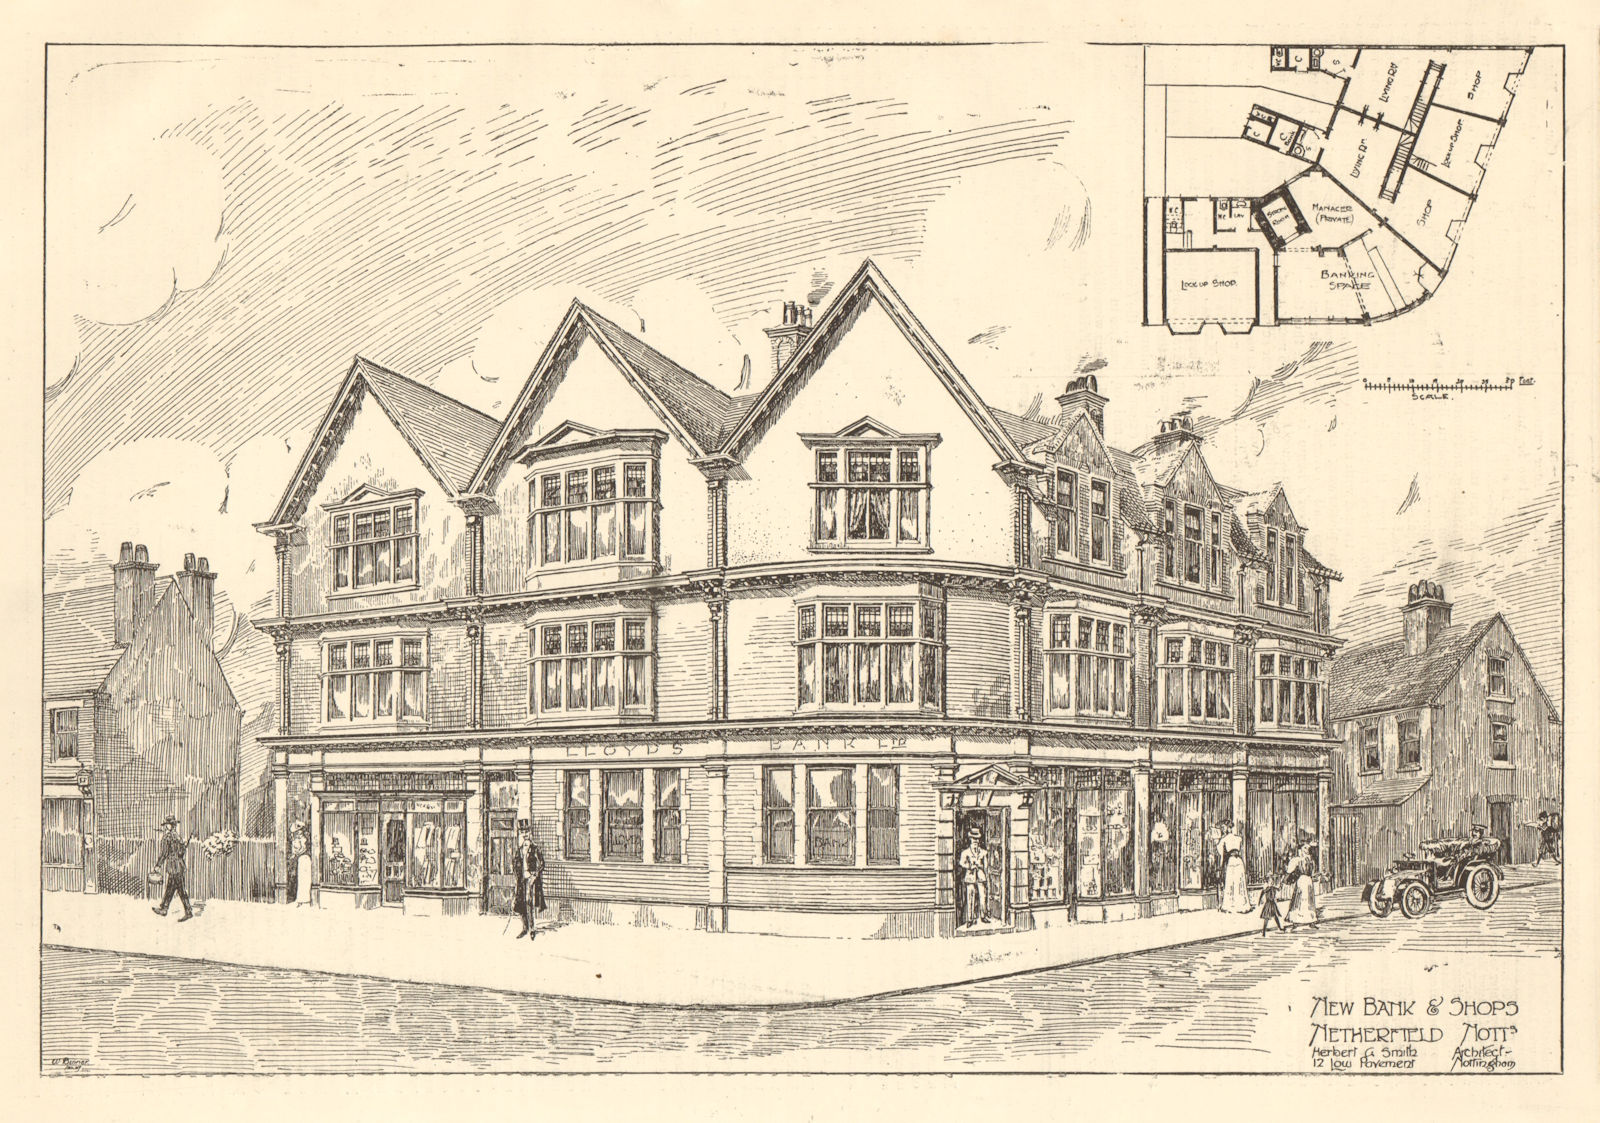 Lloyds Bank & Shops, Netherfield, Nottinghamshire. Now Its Inn the Bank pub 1907